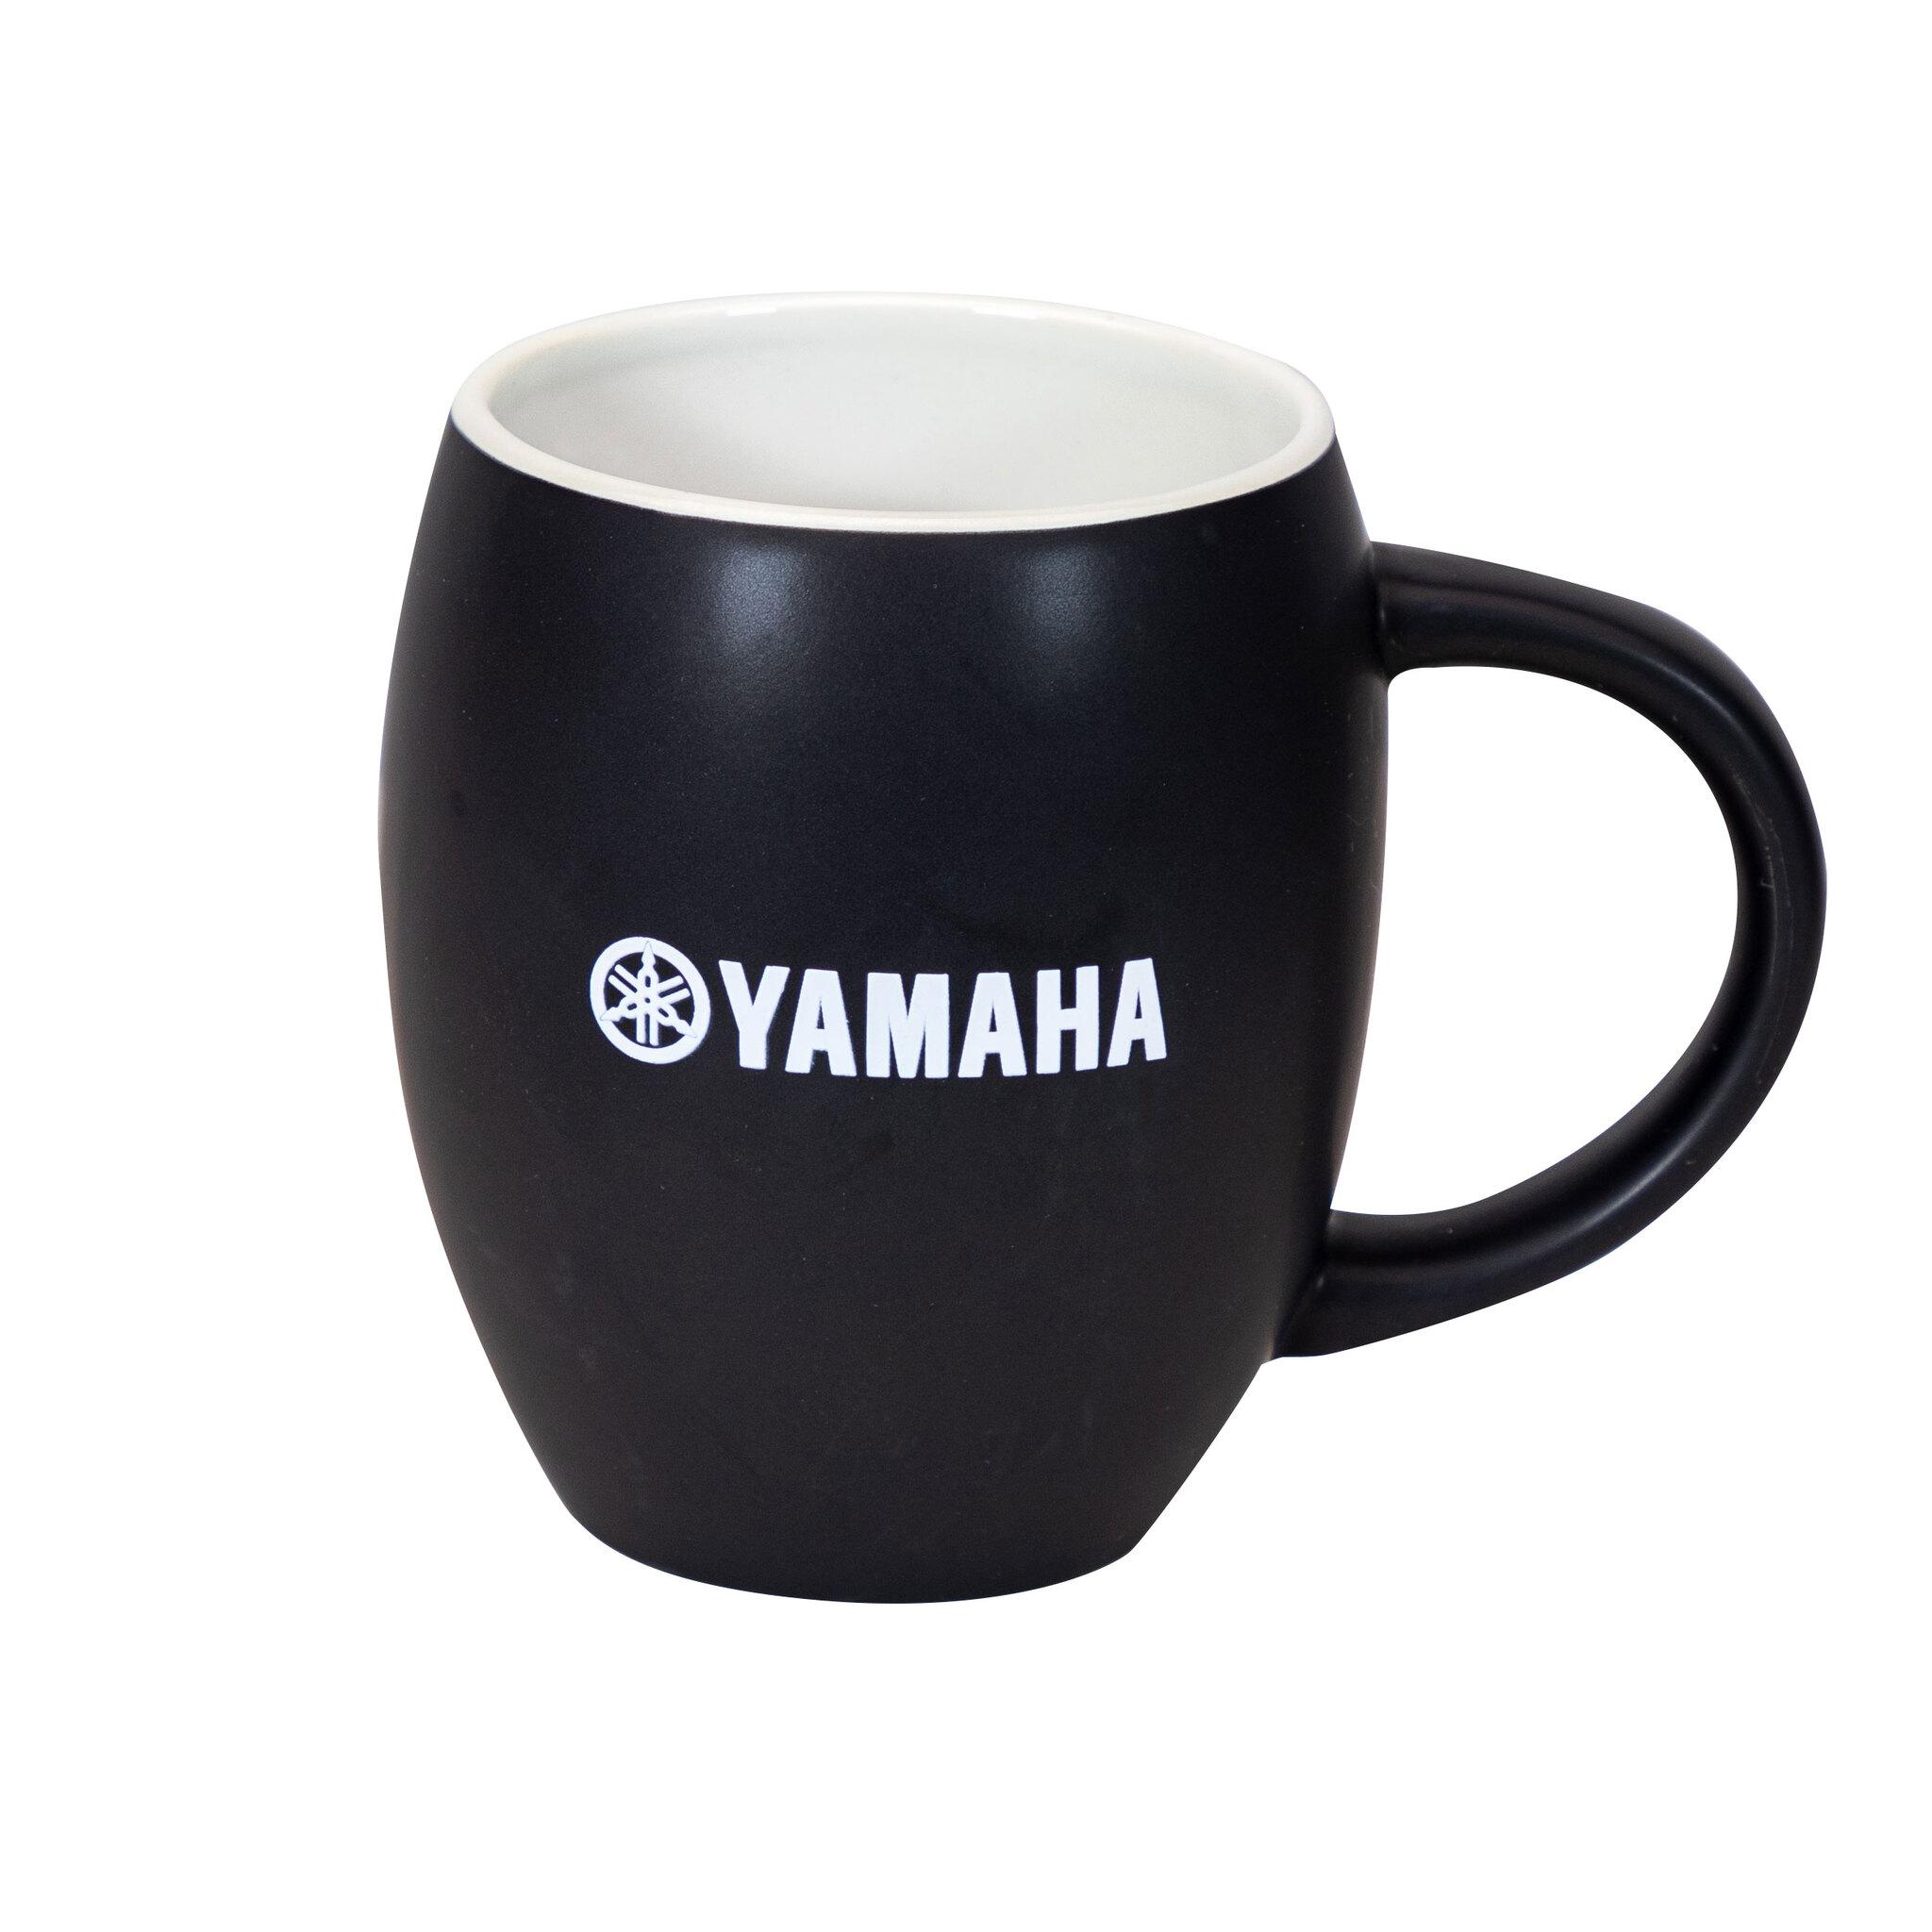 Yamaha Ceramic Bistro Mug